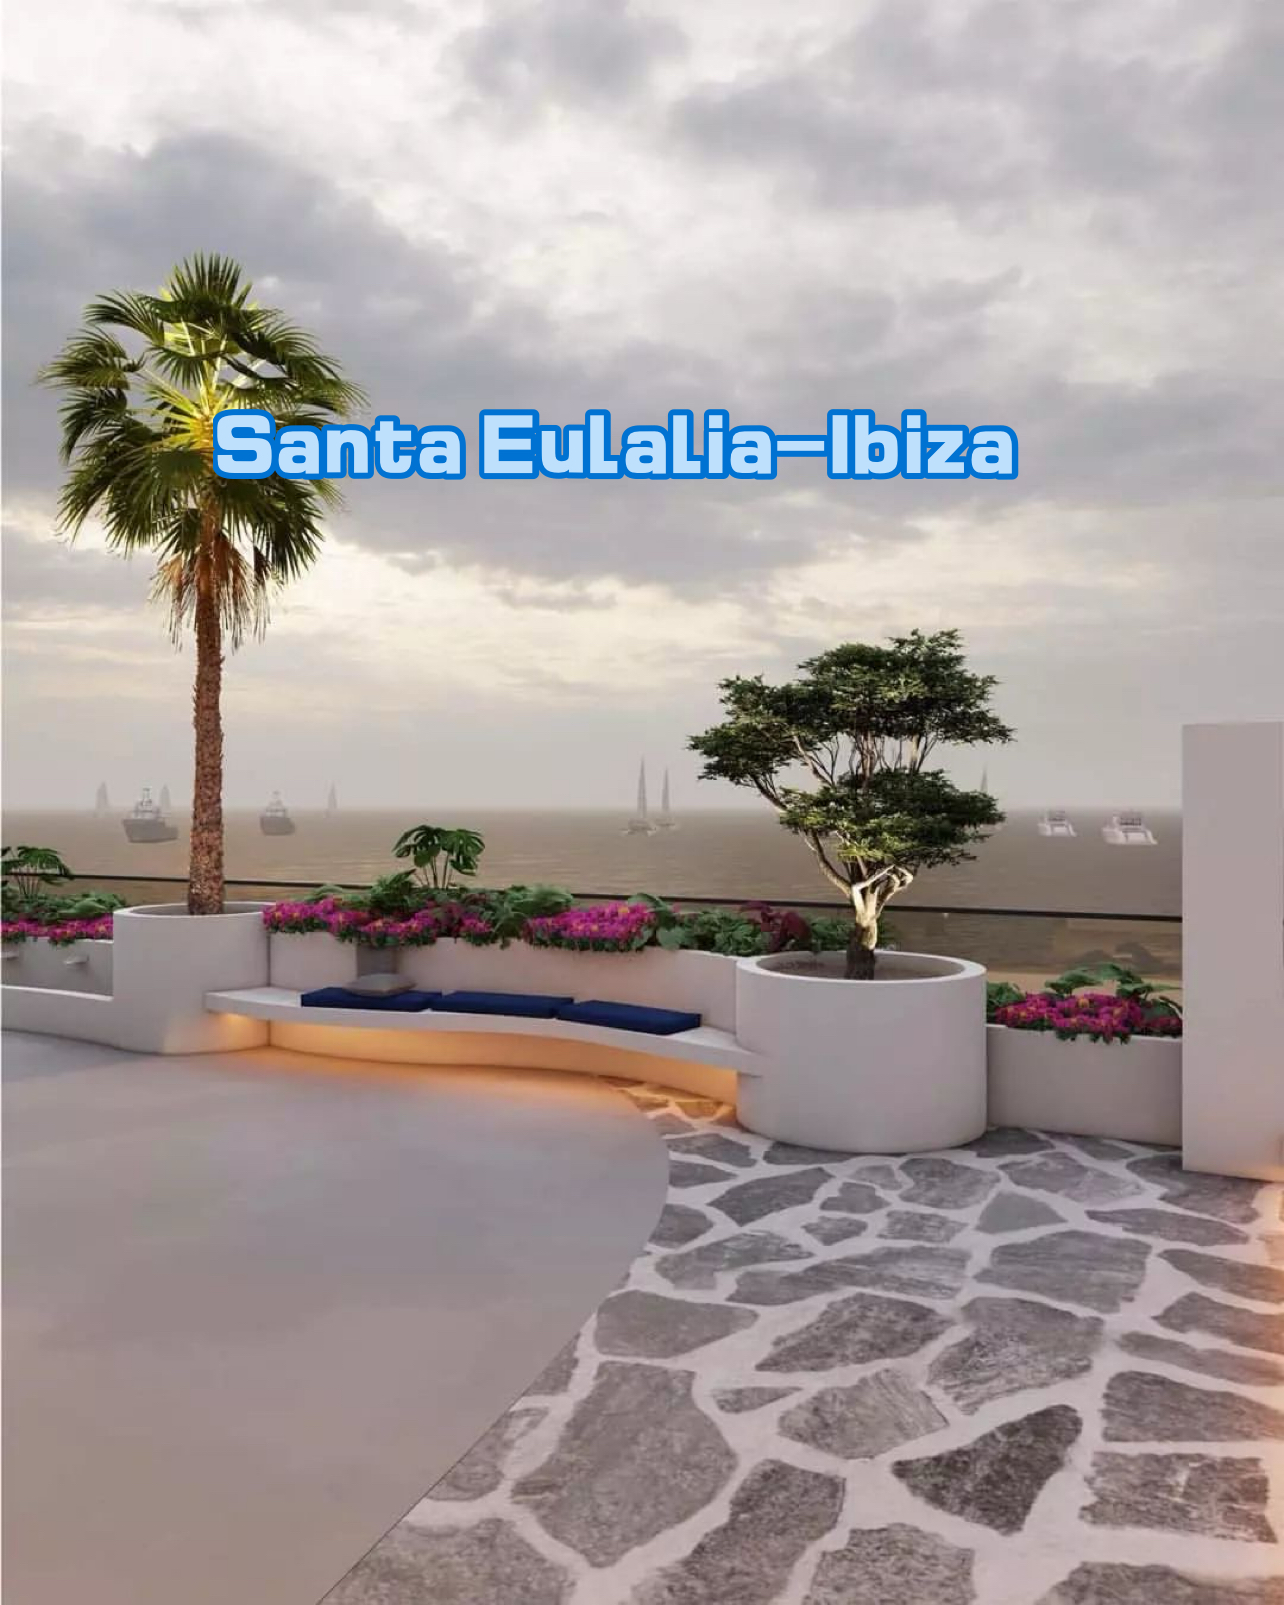 Santa Eulalia-Ibiza